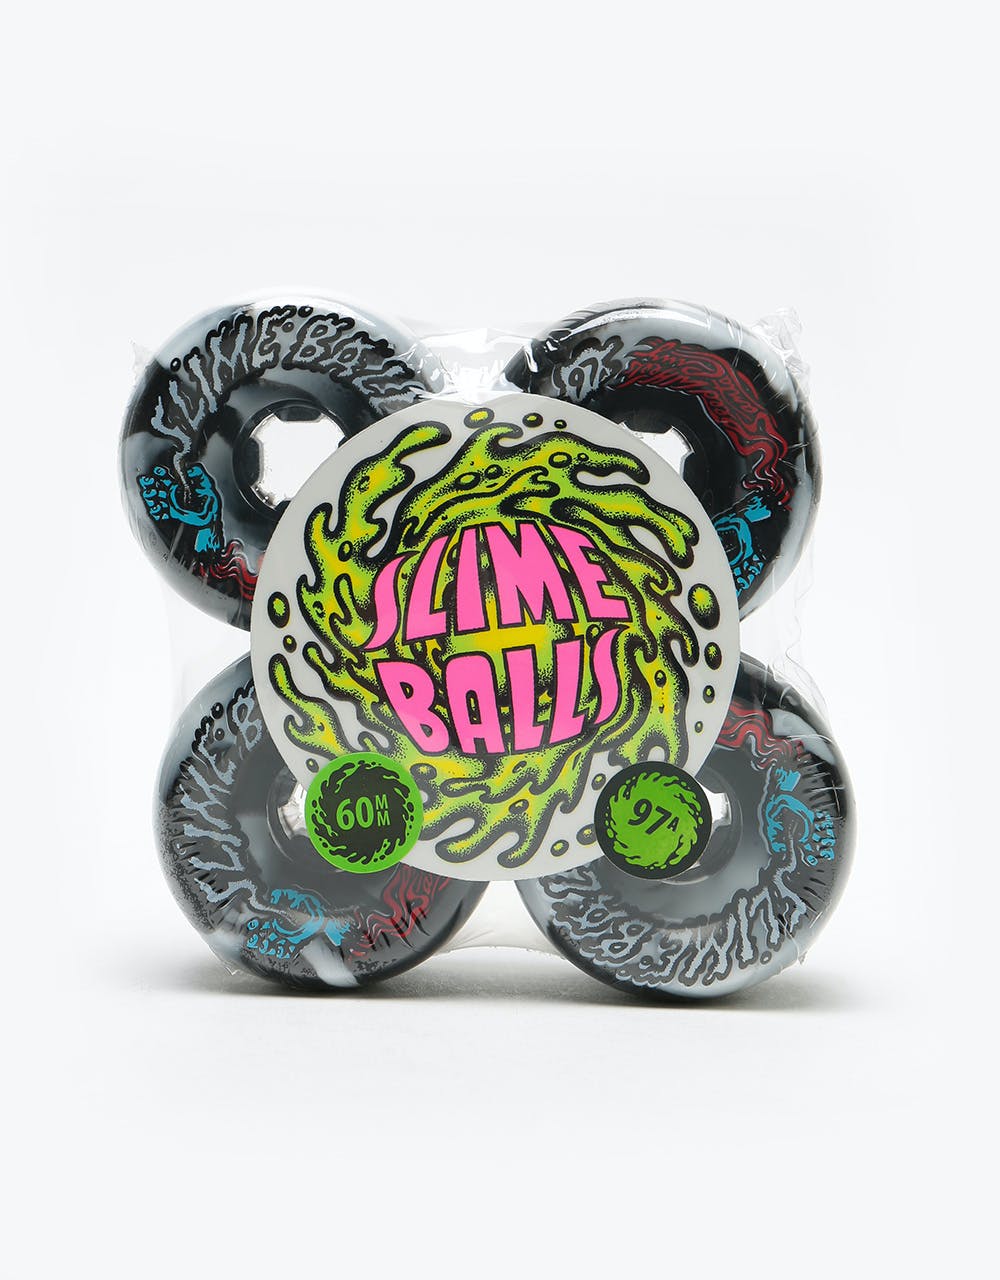 Santa Cruz Slime Balls Vomits Swirl 97a Skateboard Wheel - 60mm